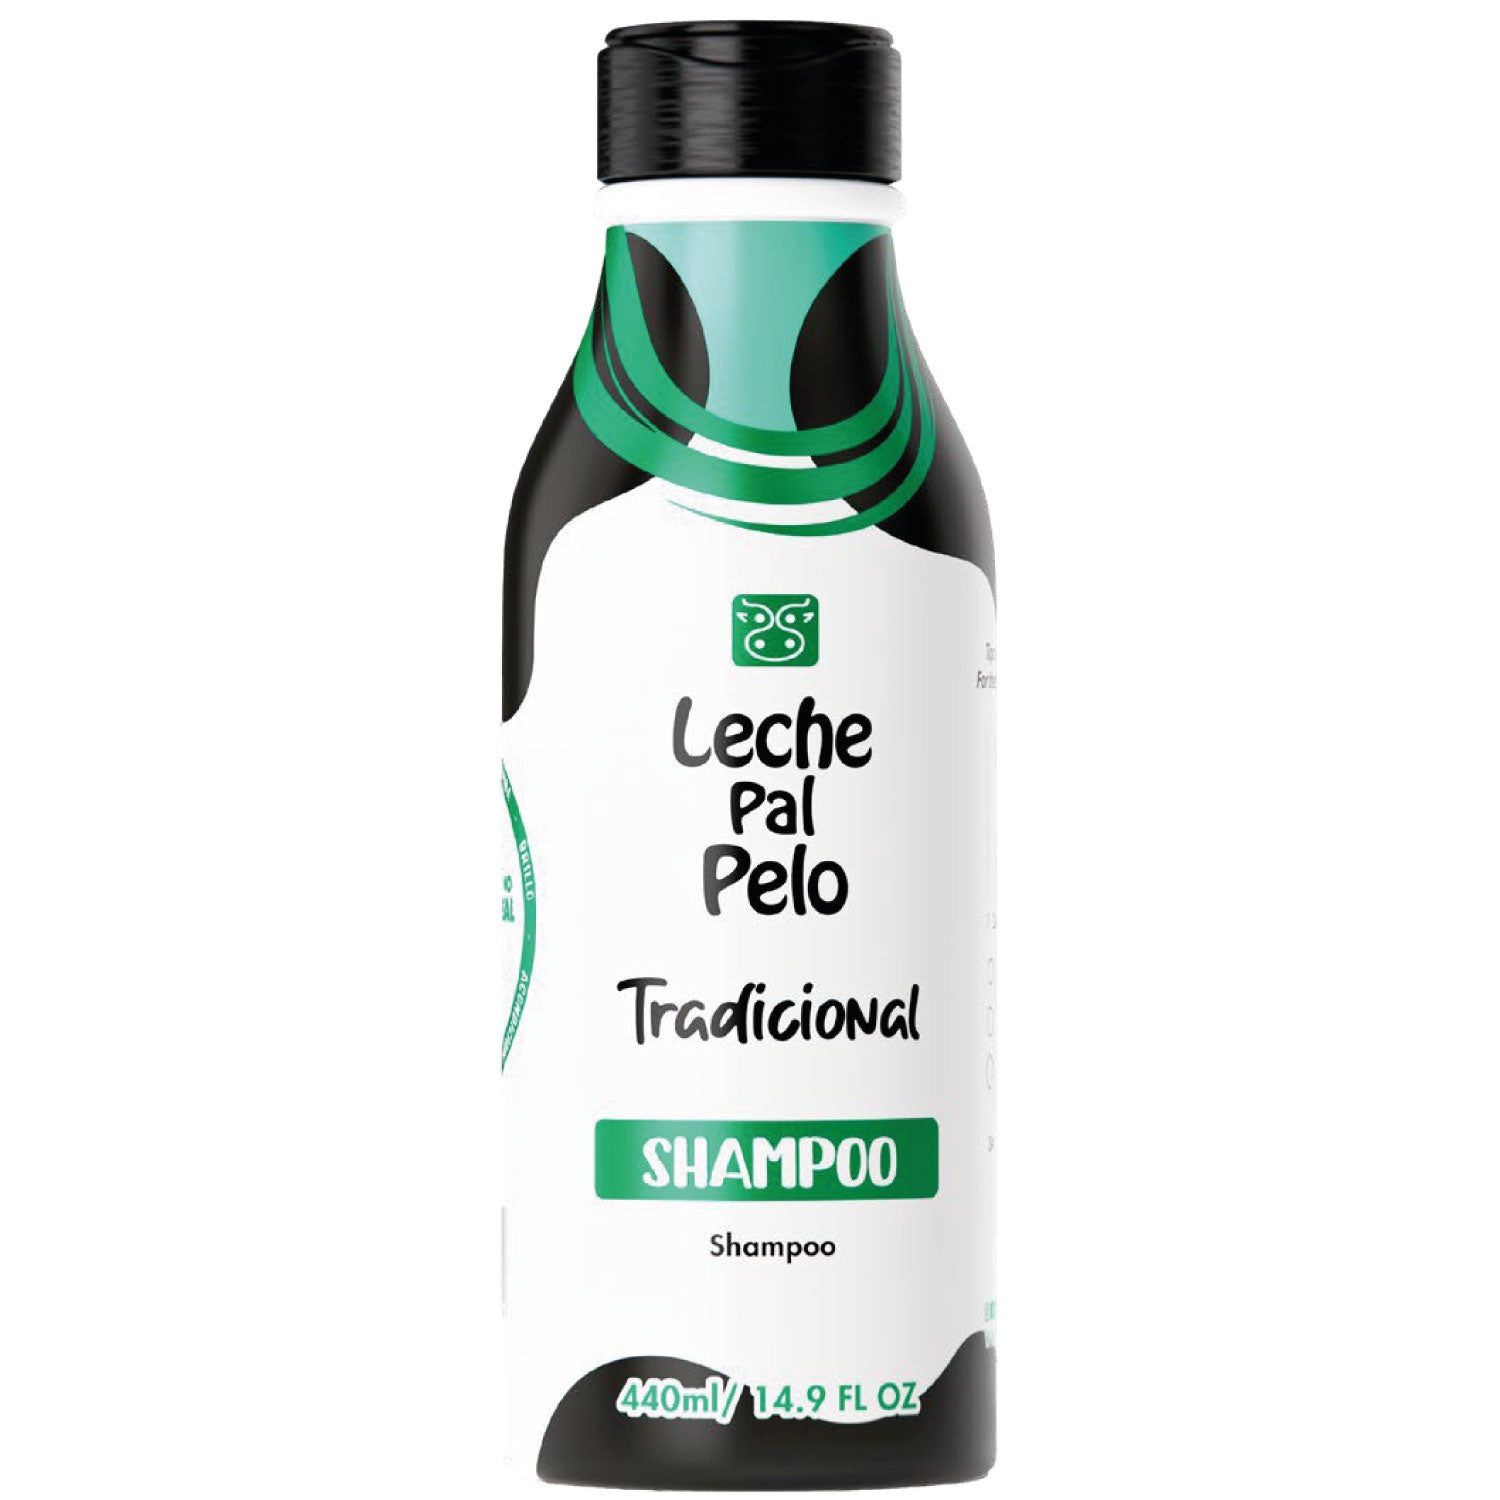 Tradicional Shampoo Leche Pal Pelo